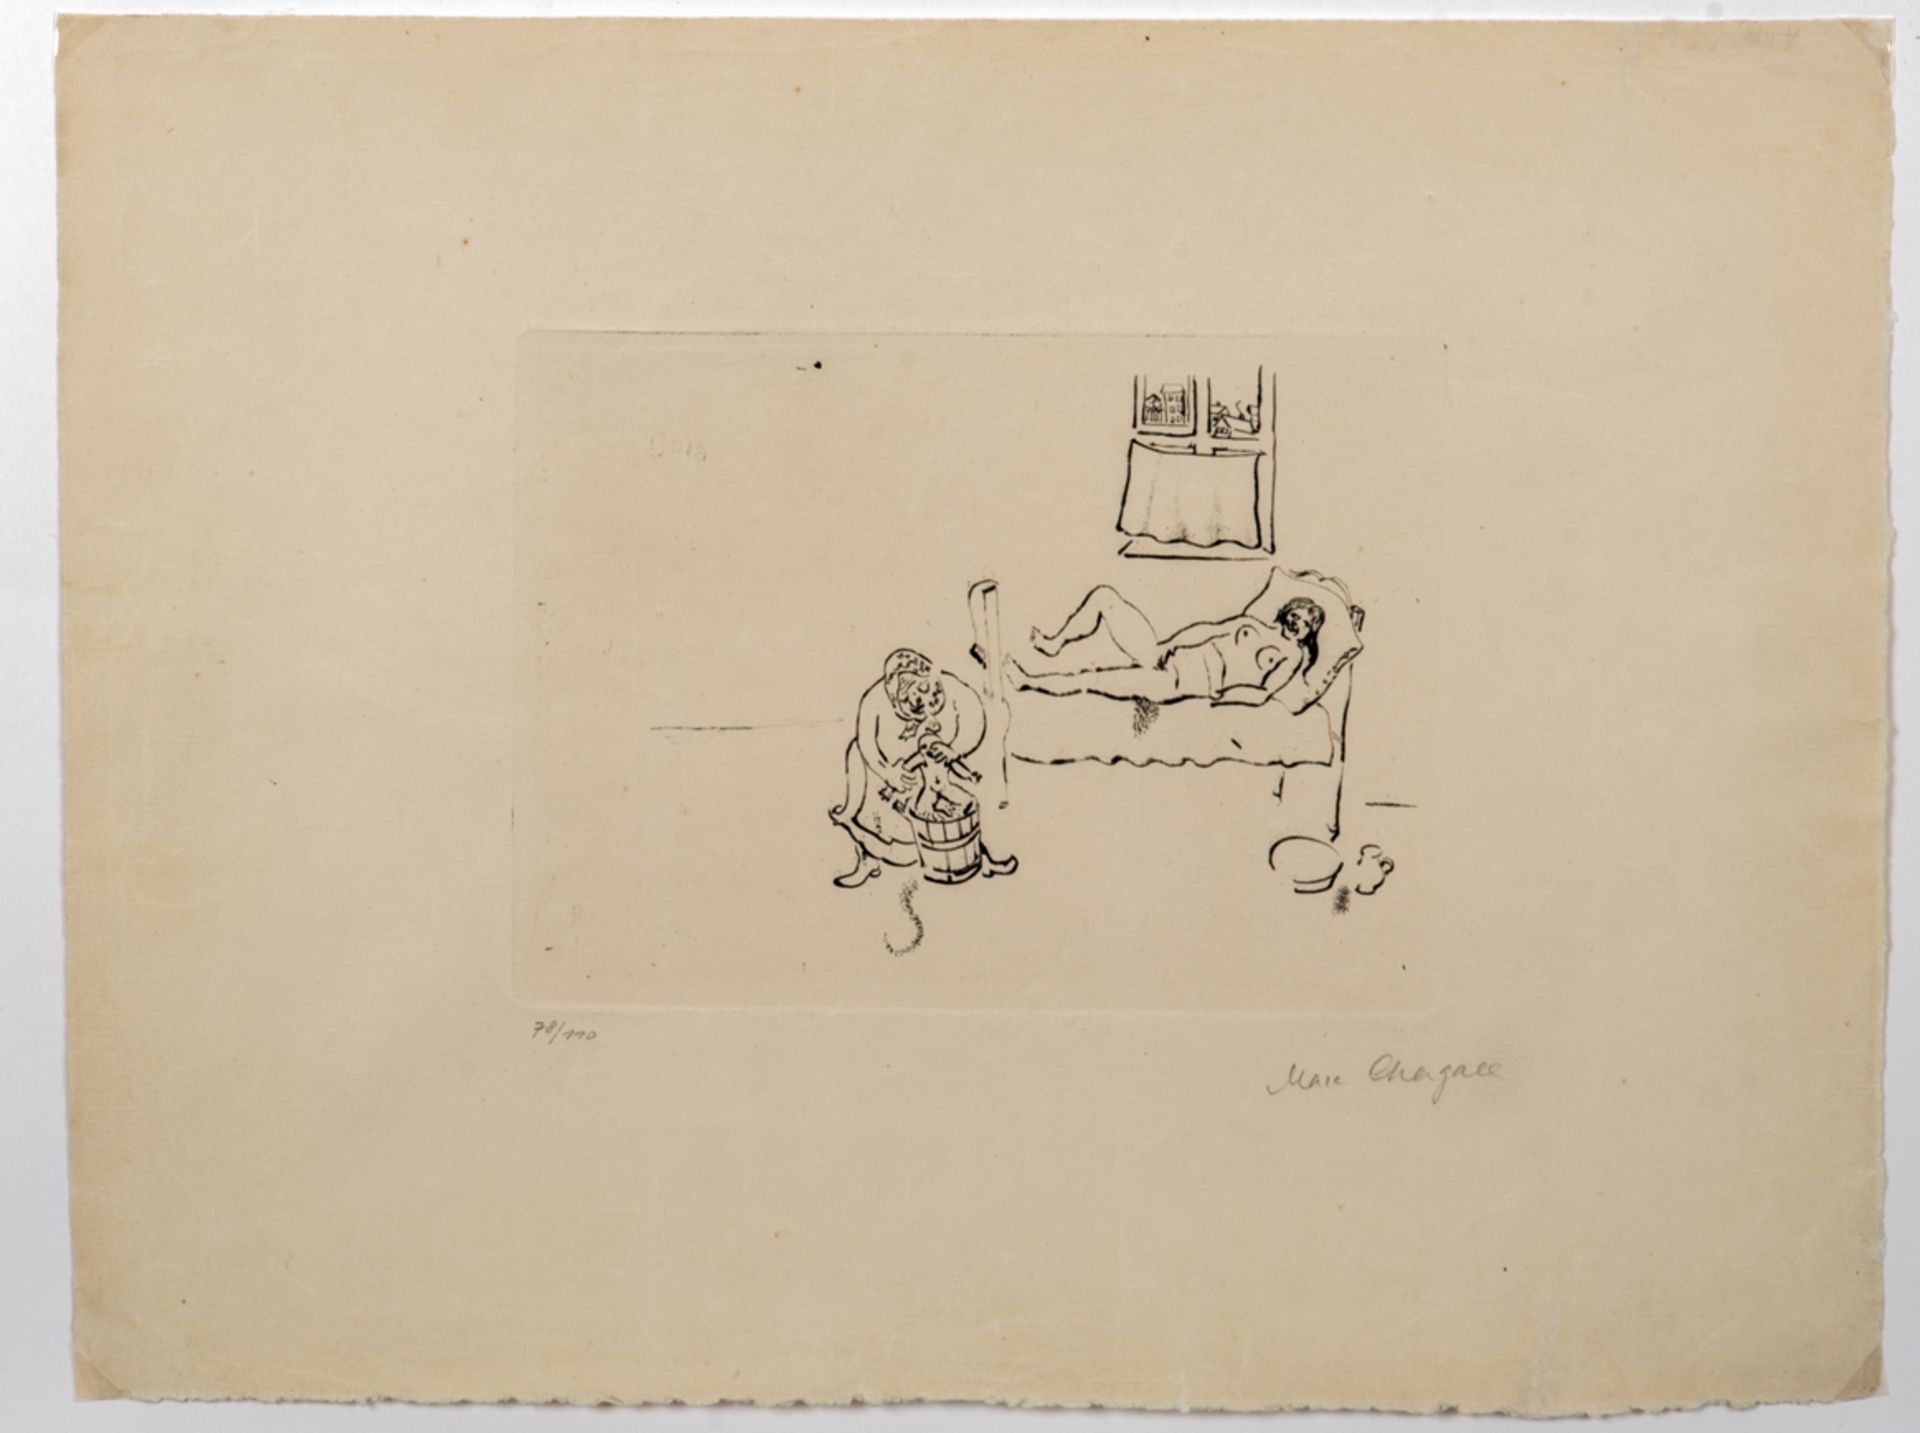 Chagall, Marc (1887 - 1985)